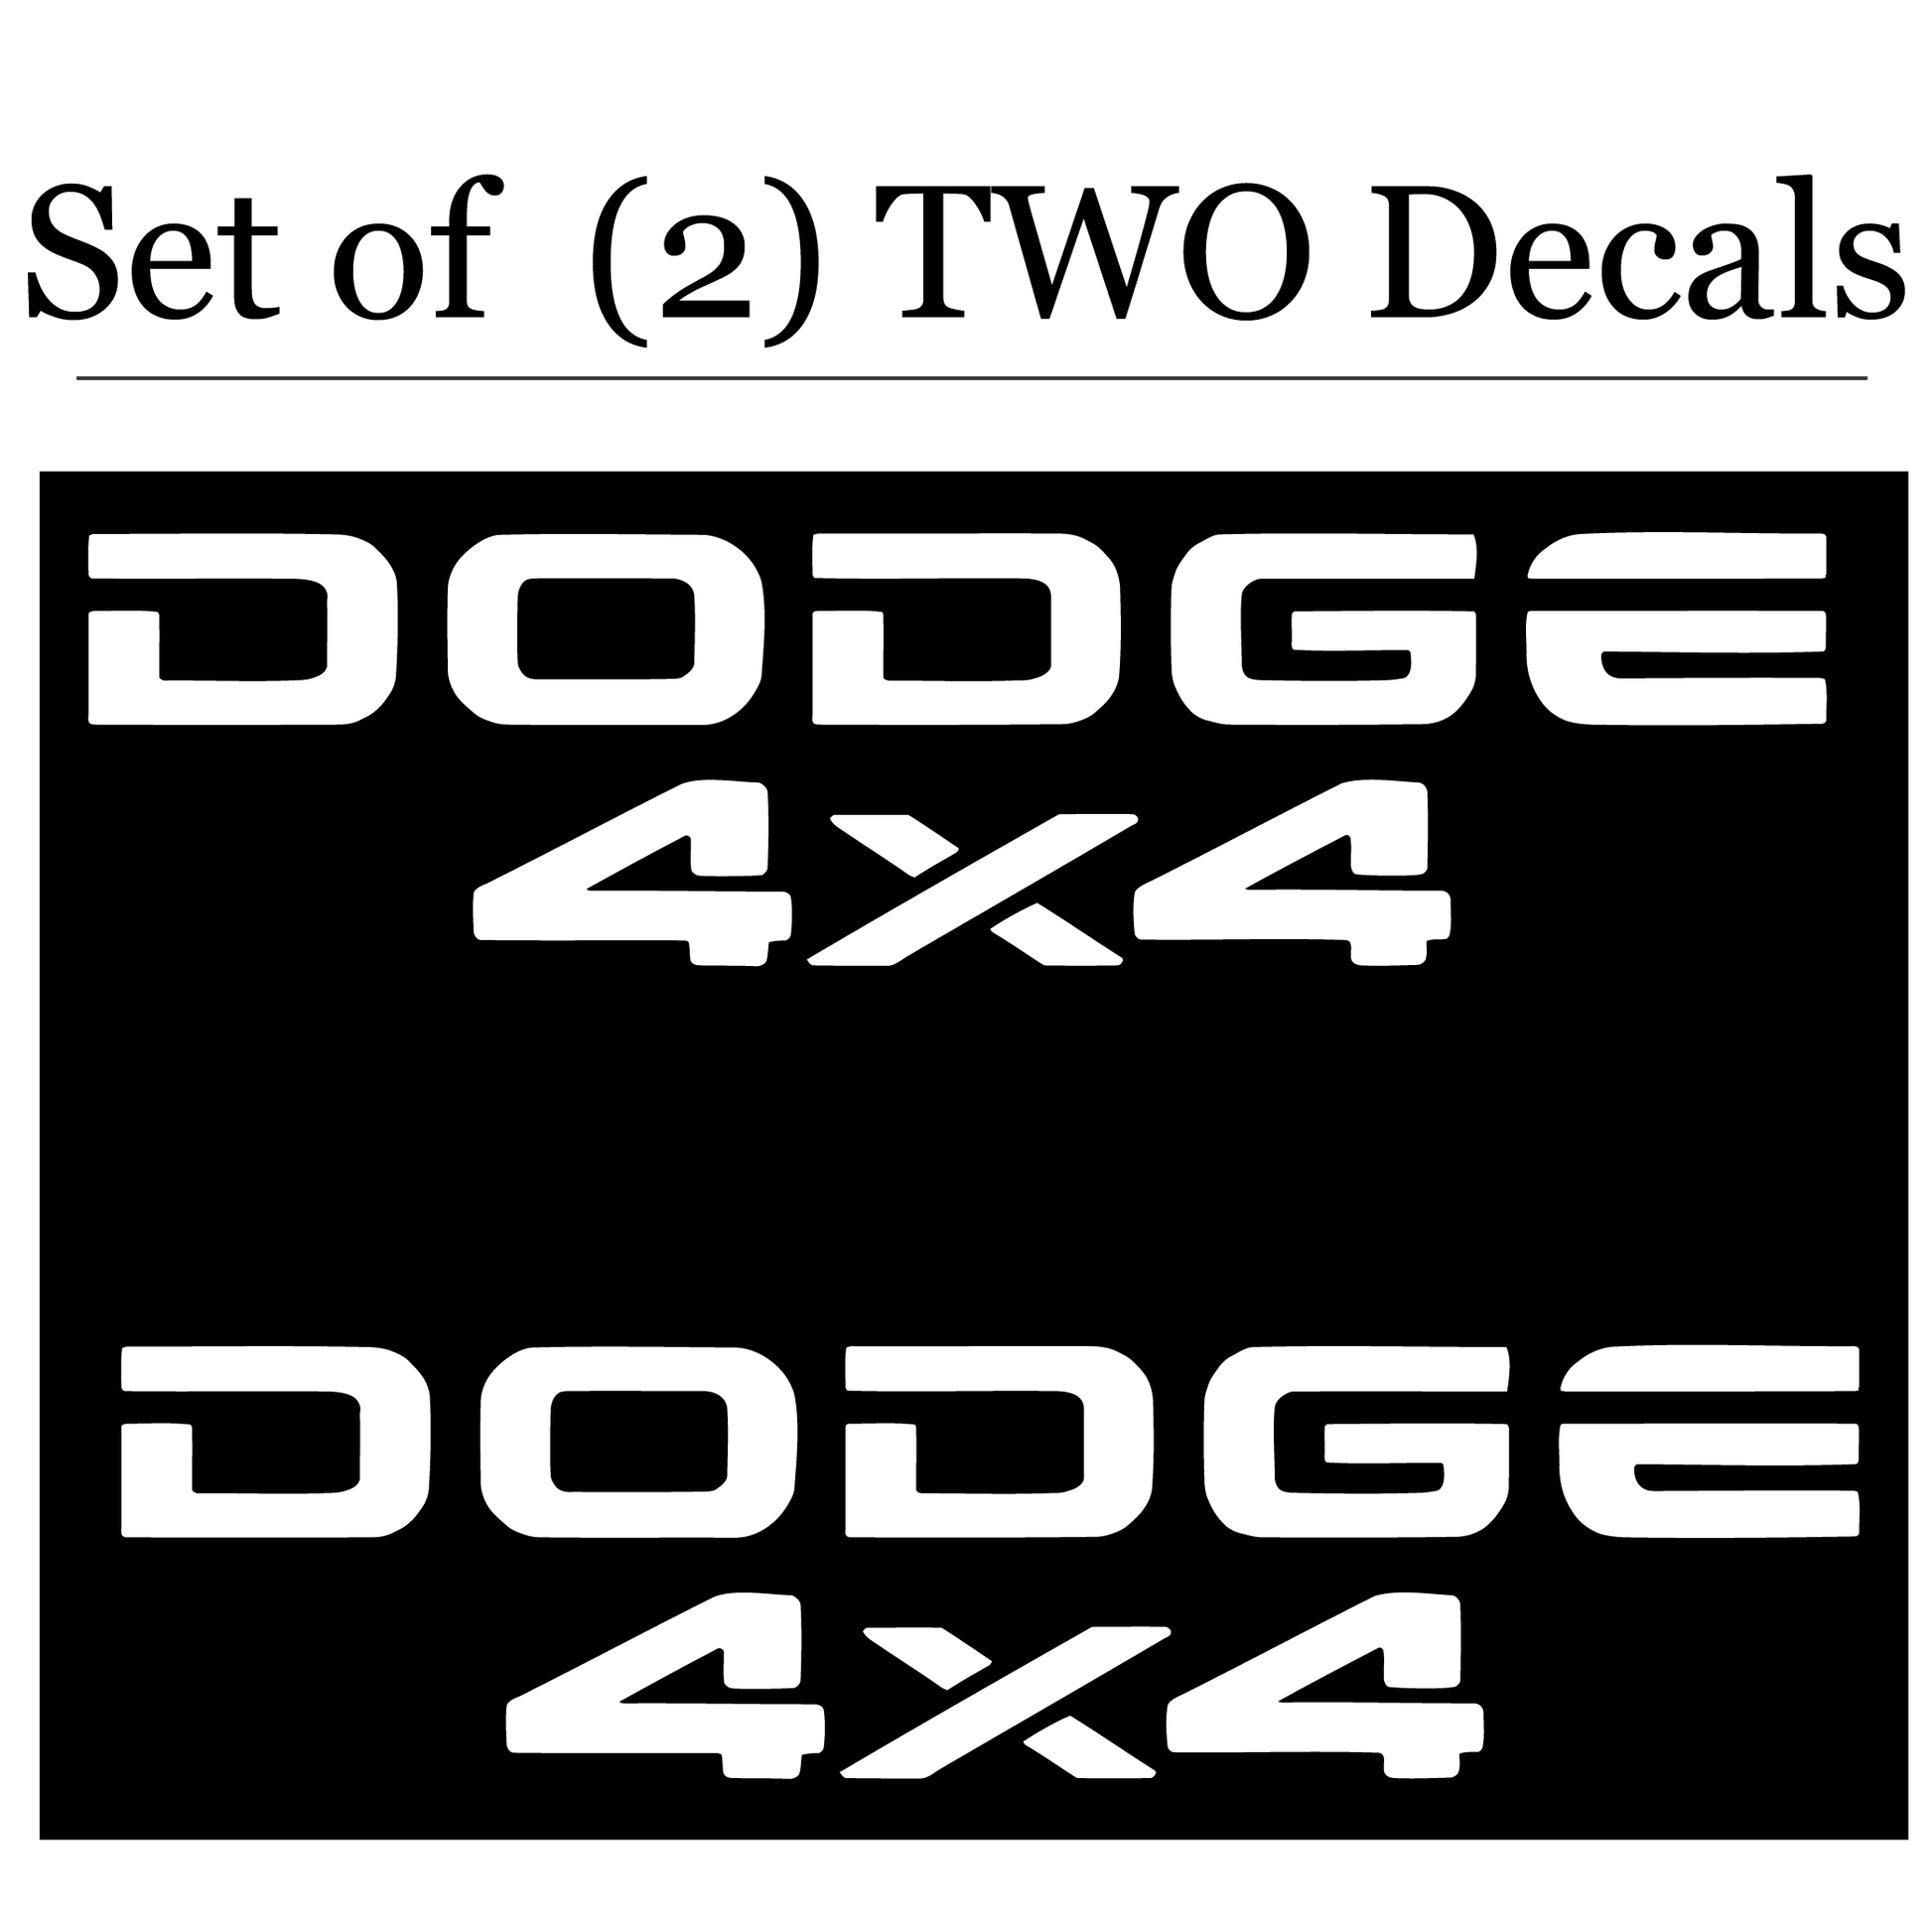 Shop Vinyl Design RAM Trucks Replacement Tailgate Decals #12 Vehicle 001 White Gloss Shop Vinyl Design decals stickers